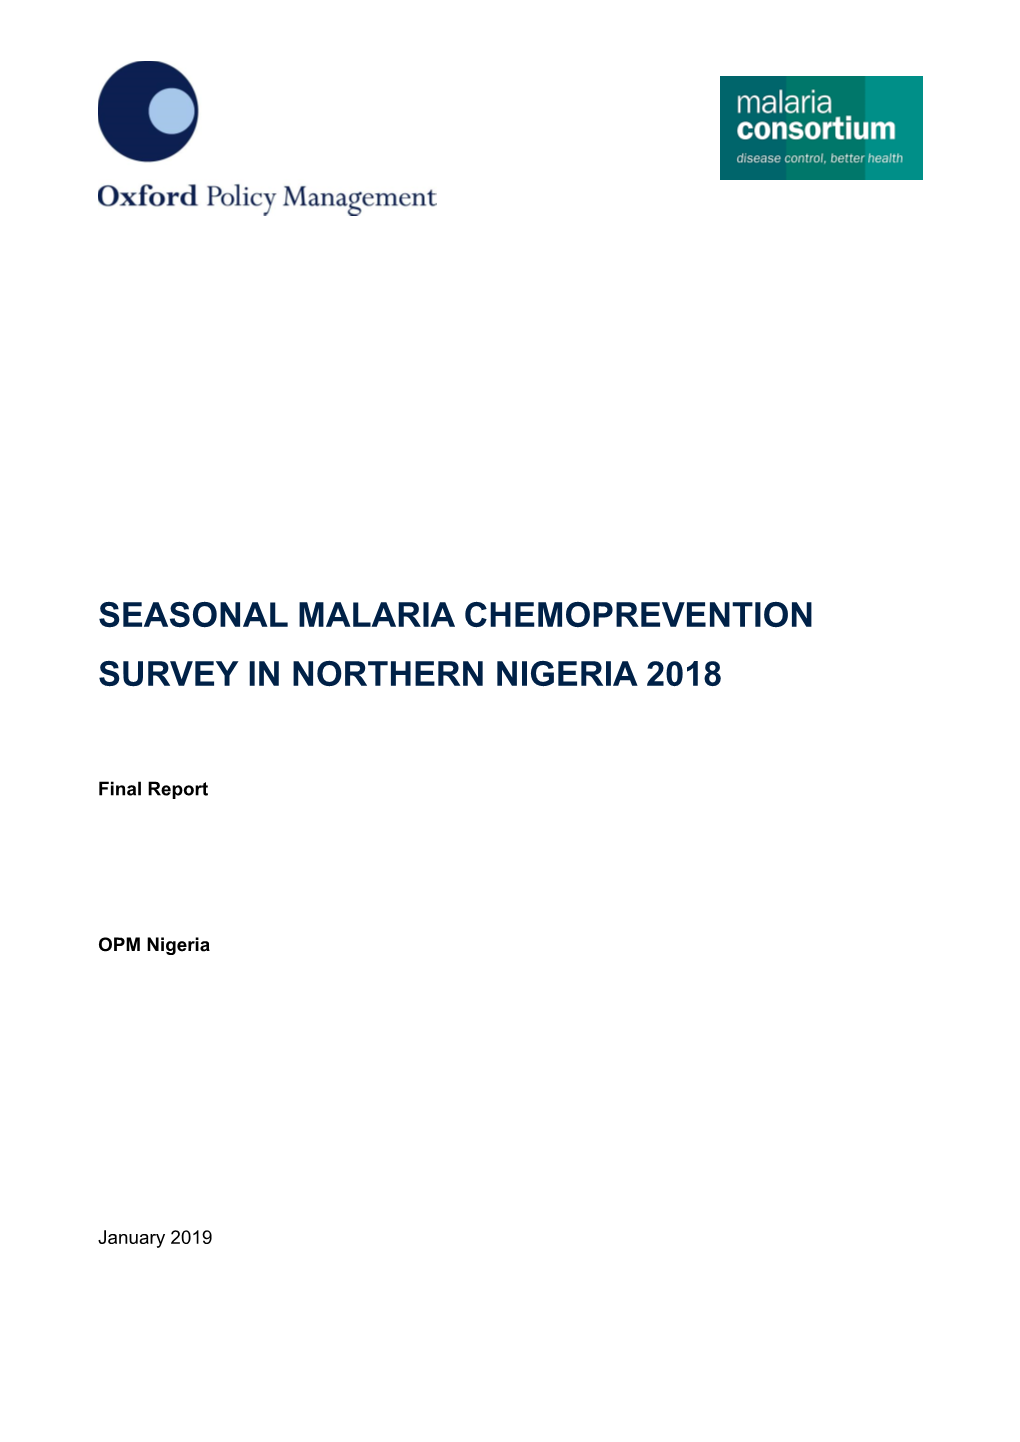 Seasonal Malaria Chemoprevention Survey in Northern Nigeria 2018